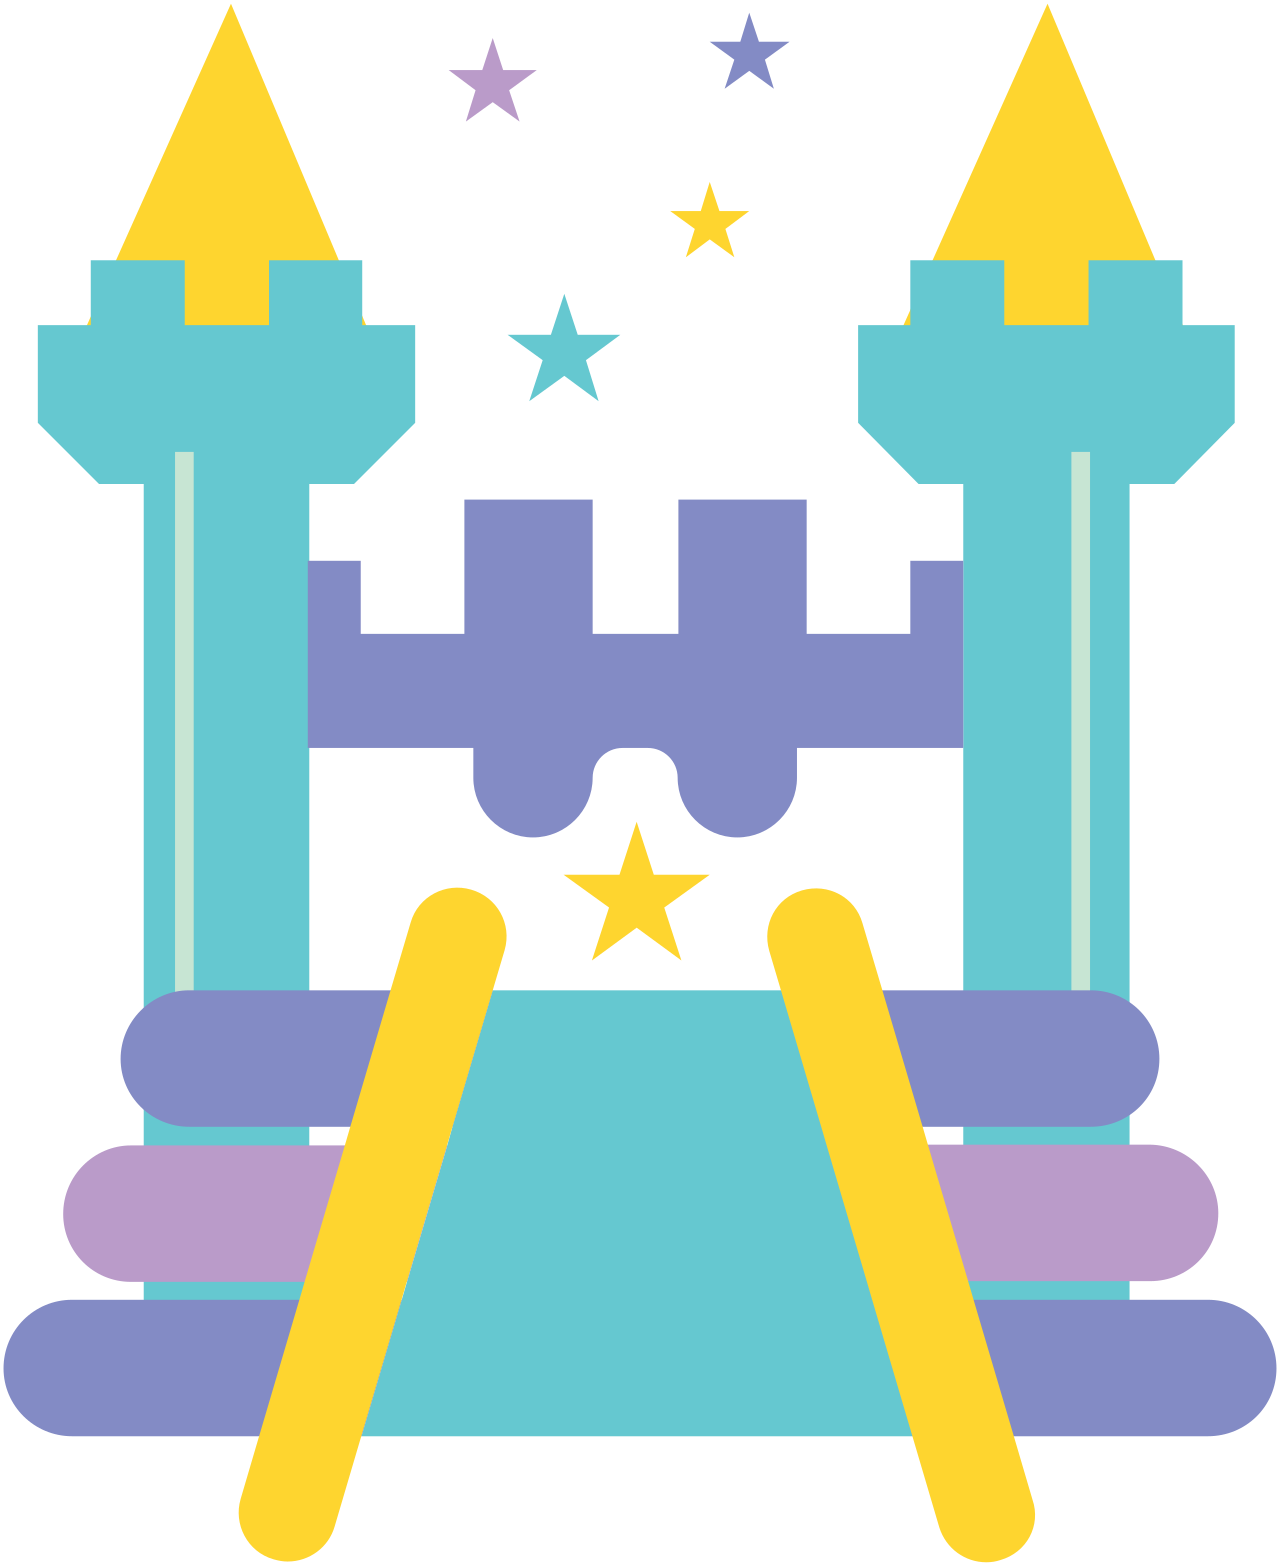 Ryedale bouncy castles's logo